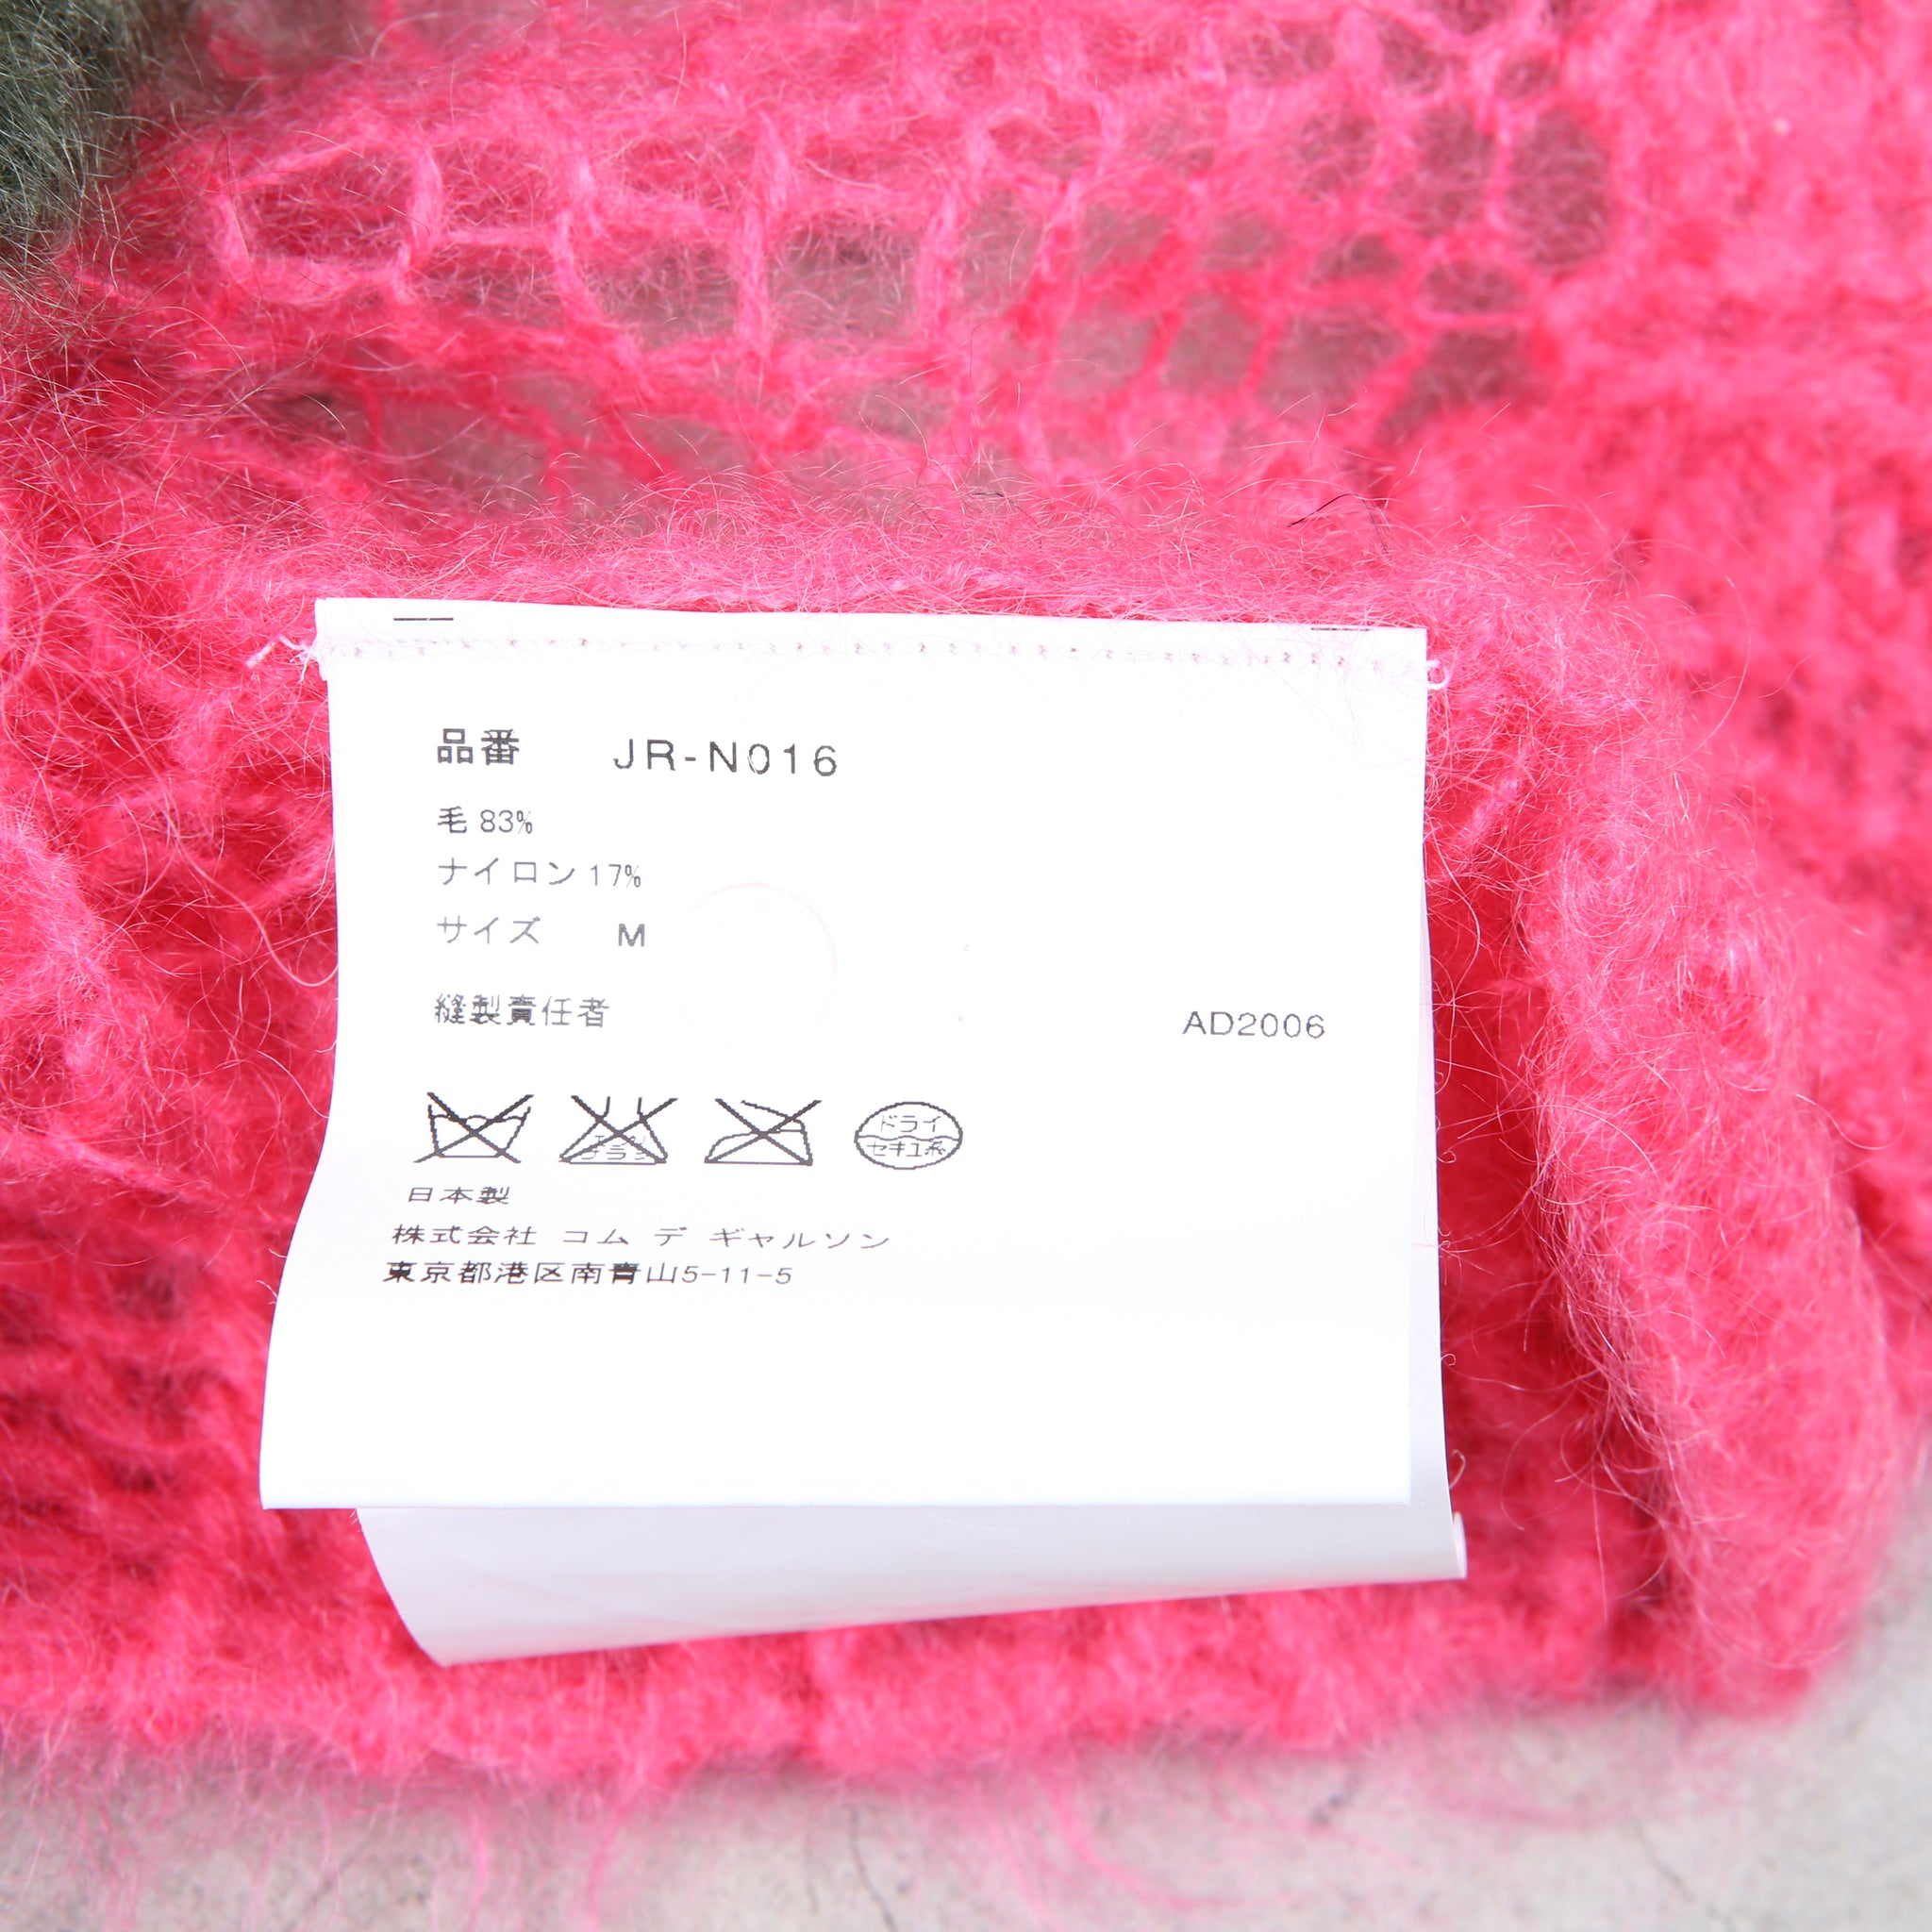 Junya Watanabe AW06 Pink Mohair Knit